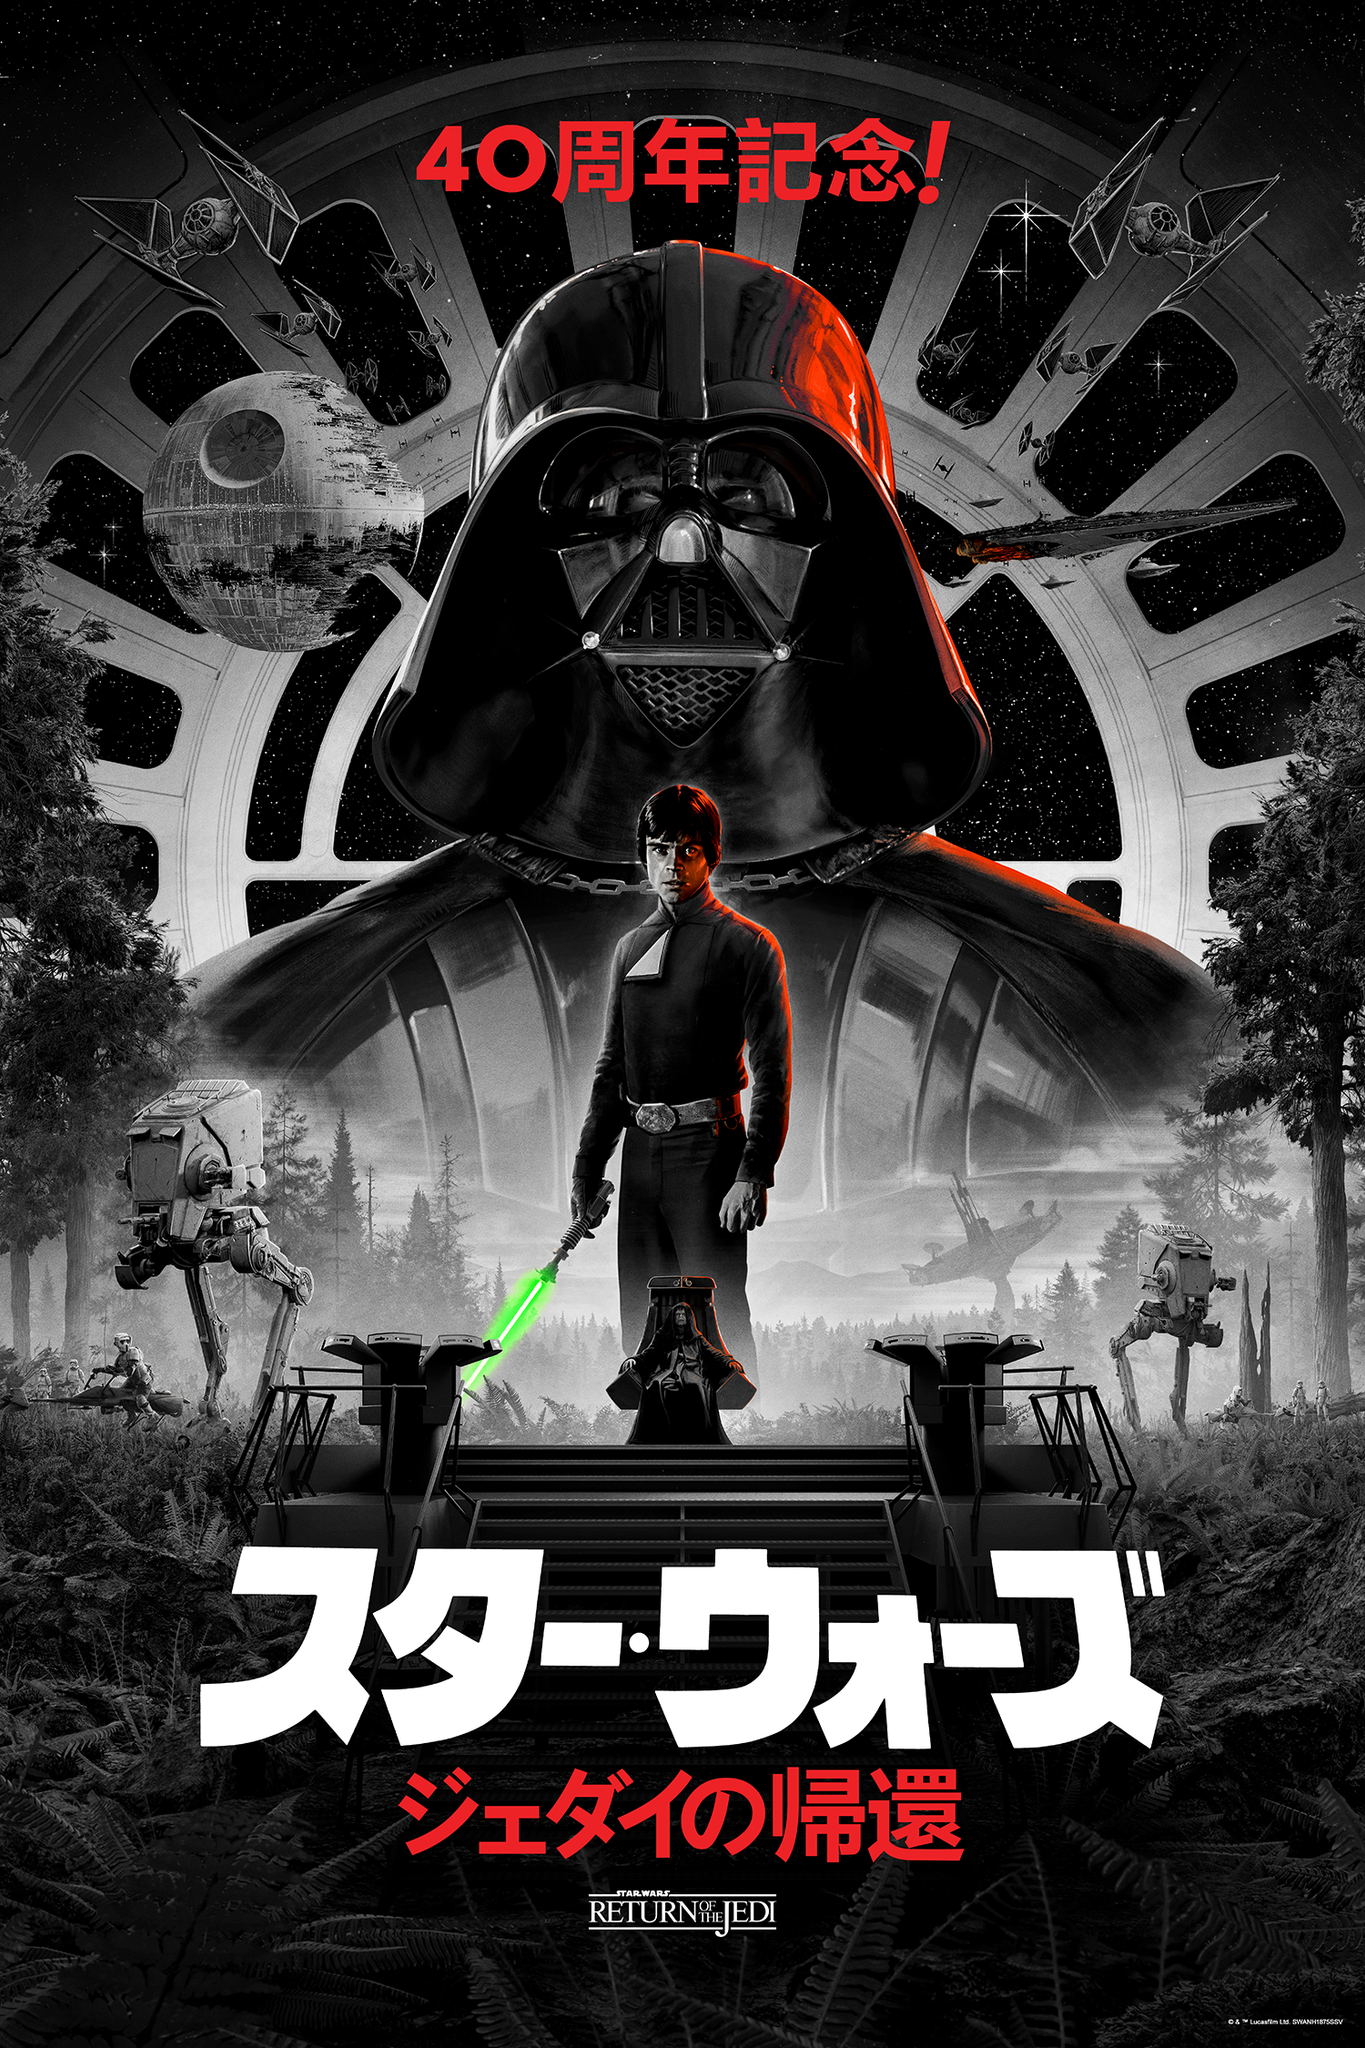 Star Wars "Return of the Jedi - 40th Anniv."  Japanese Variant